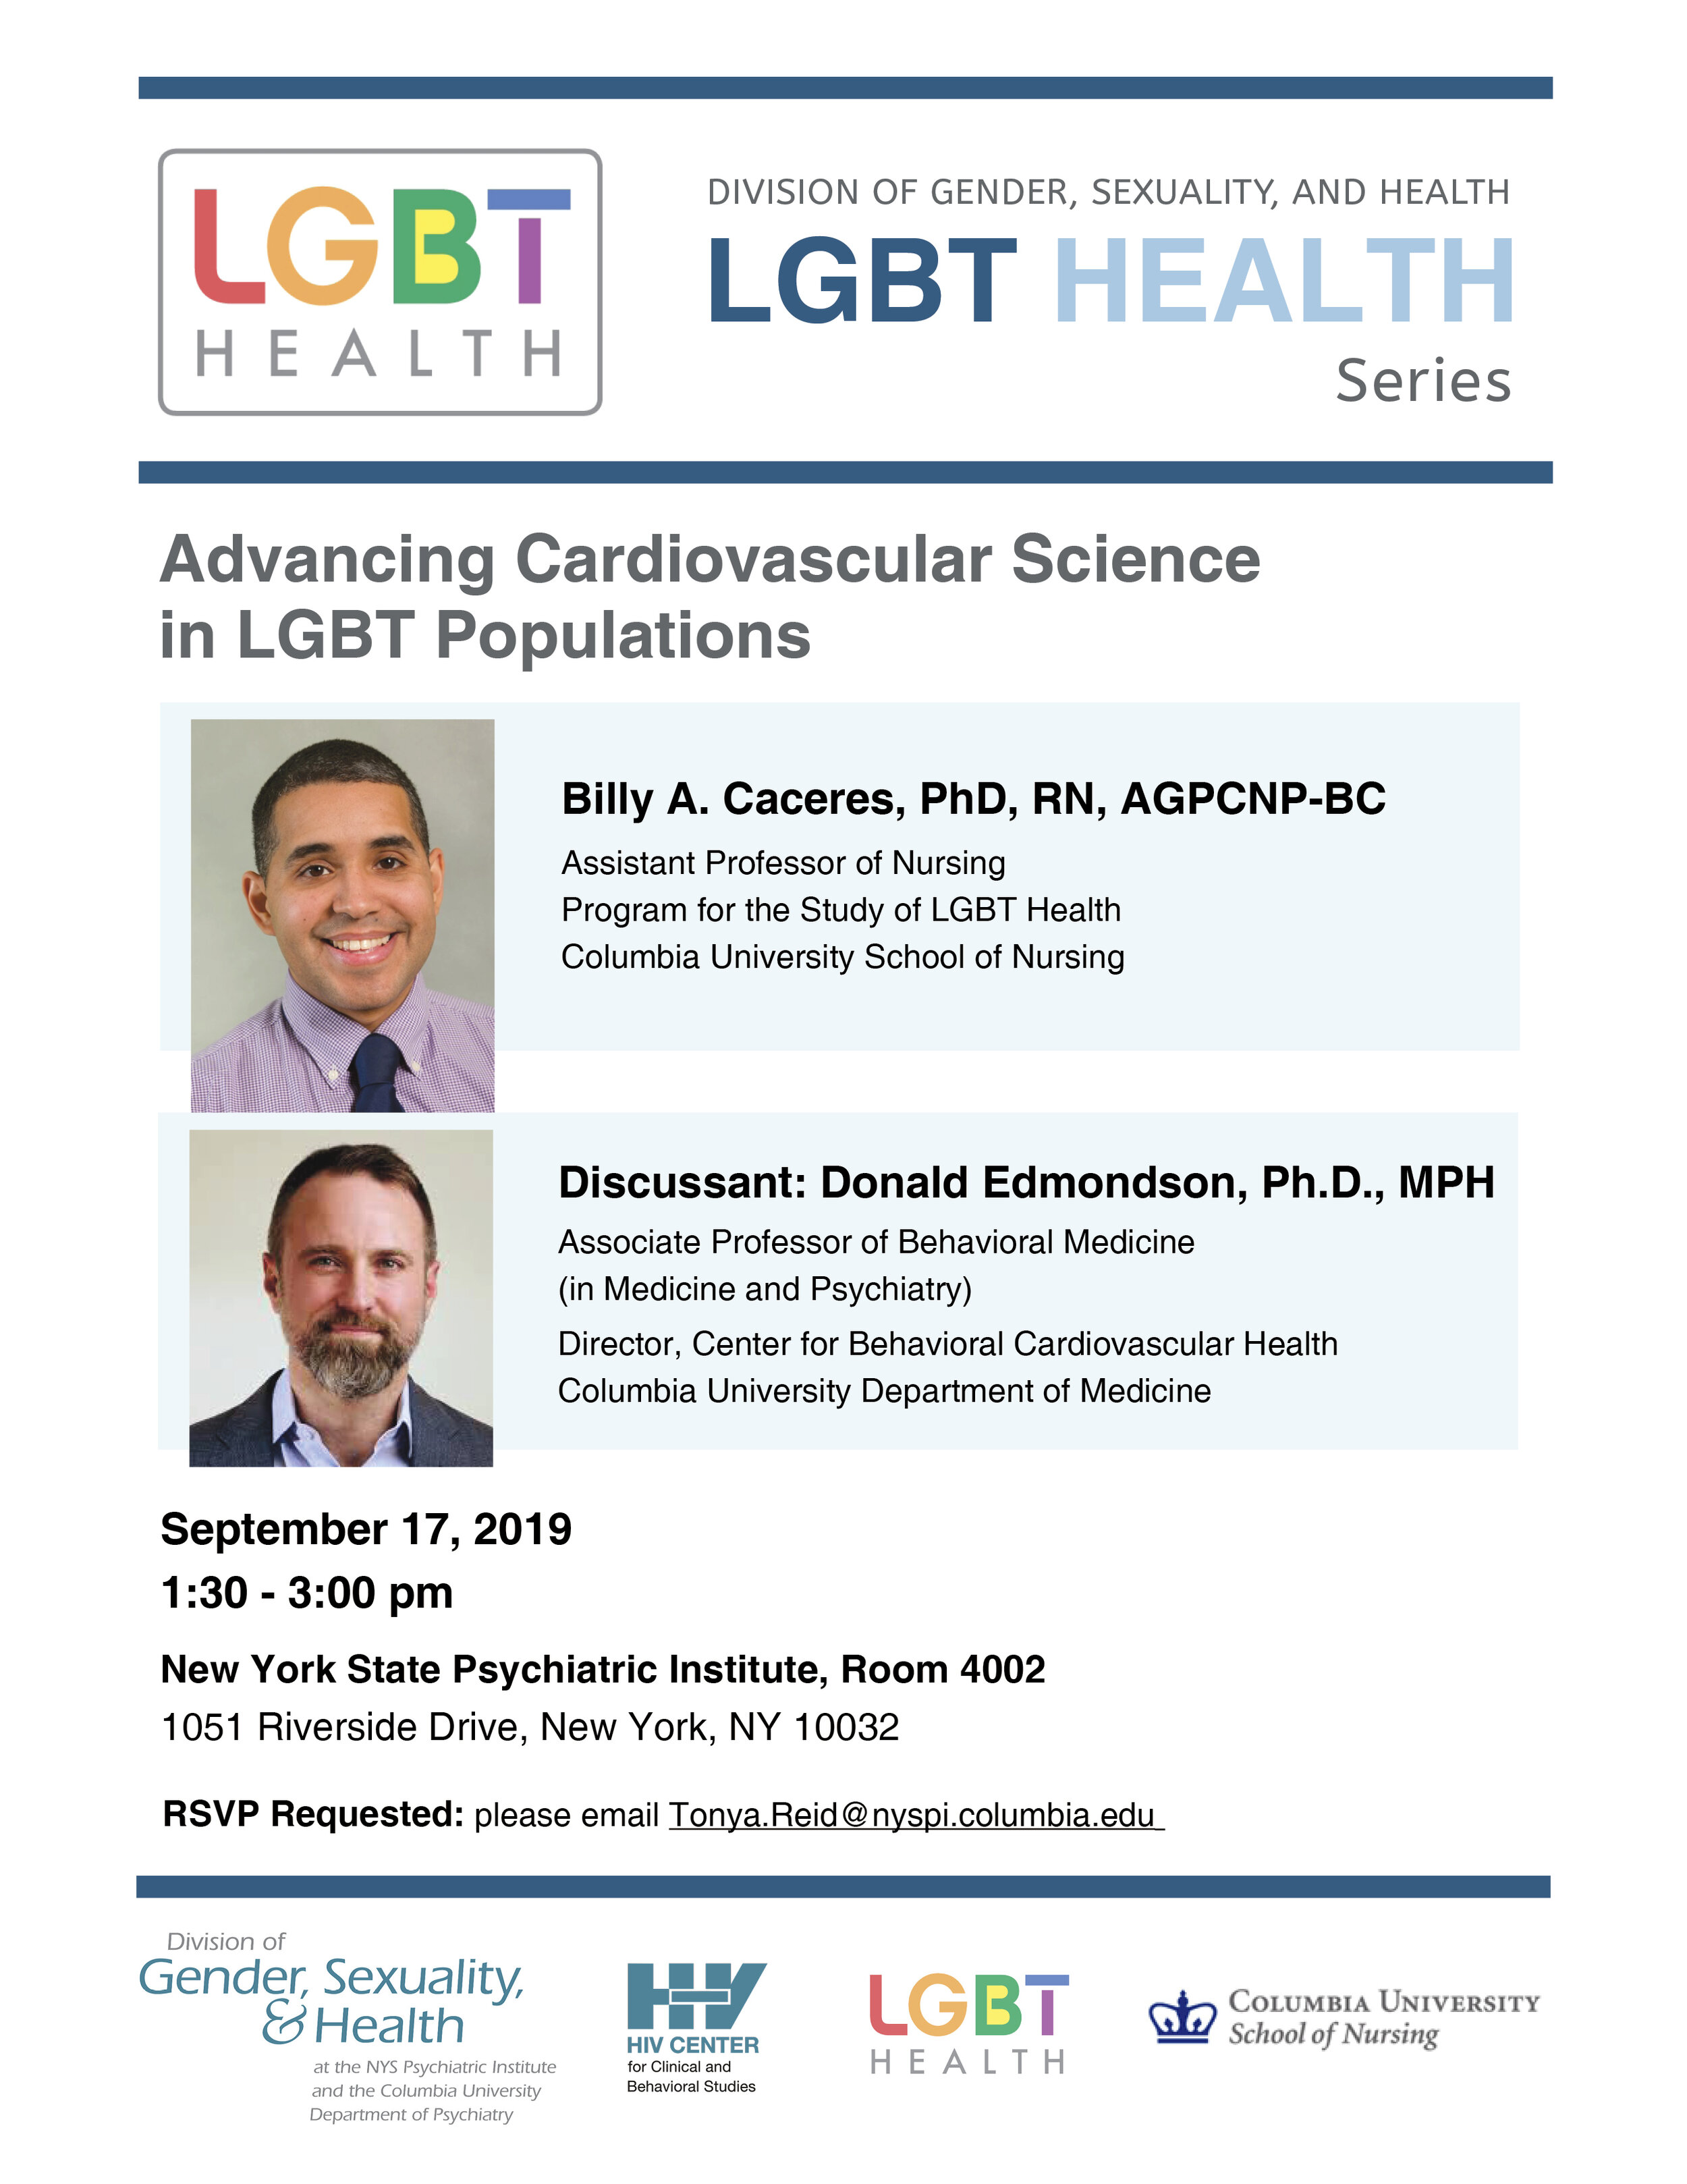 LGBT Health Series Sept 17 2019.jpg